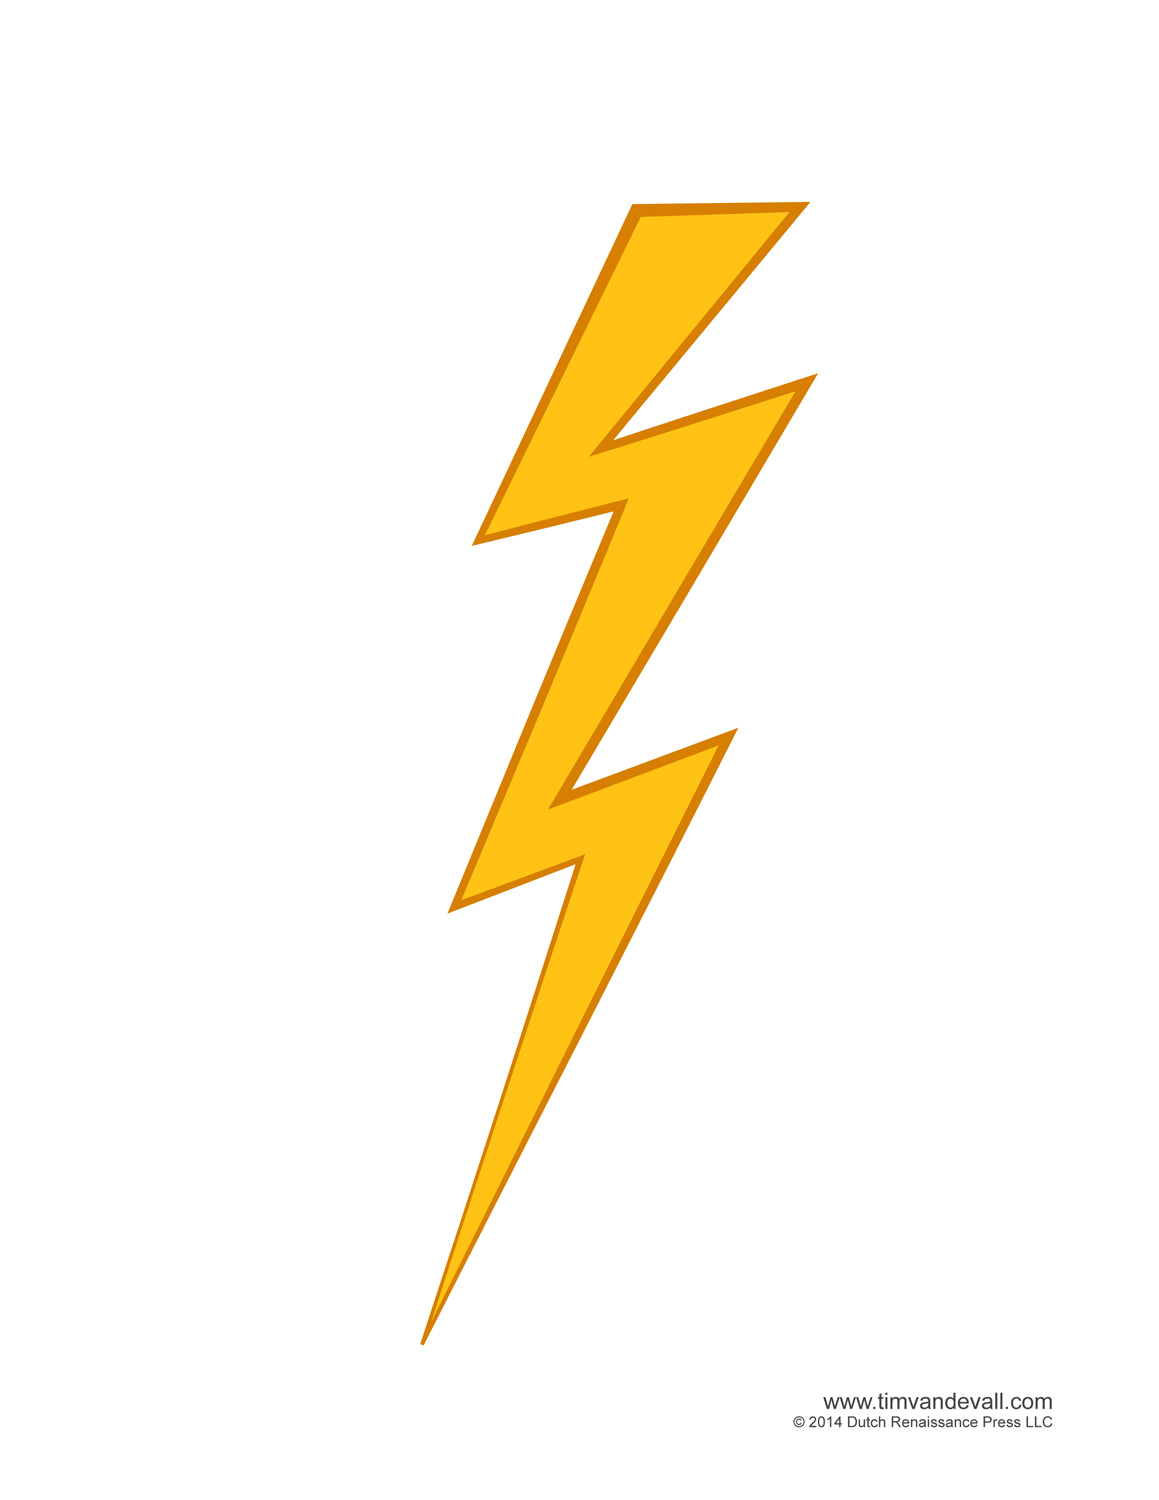 Zeus lightning bolt.